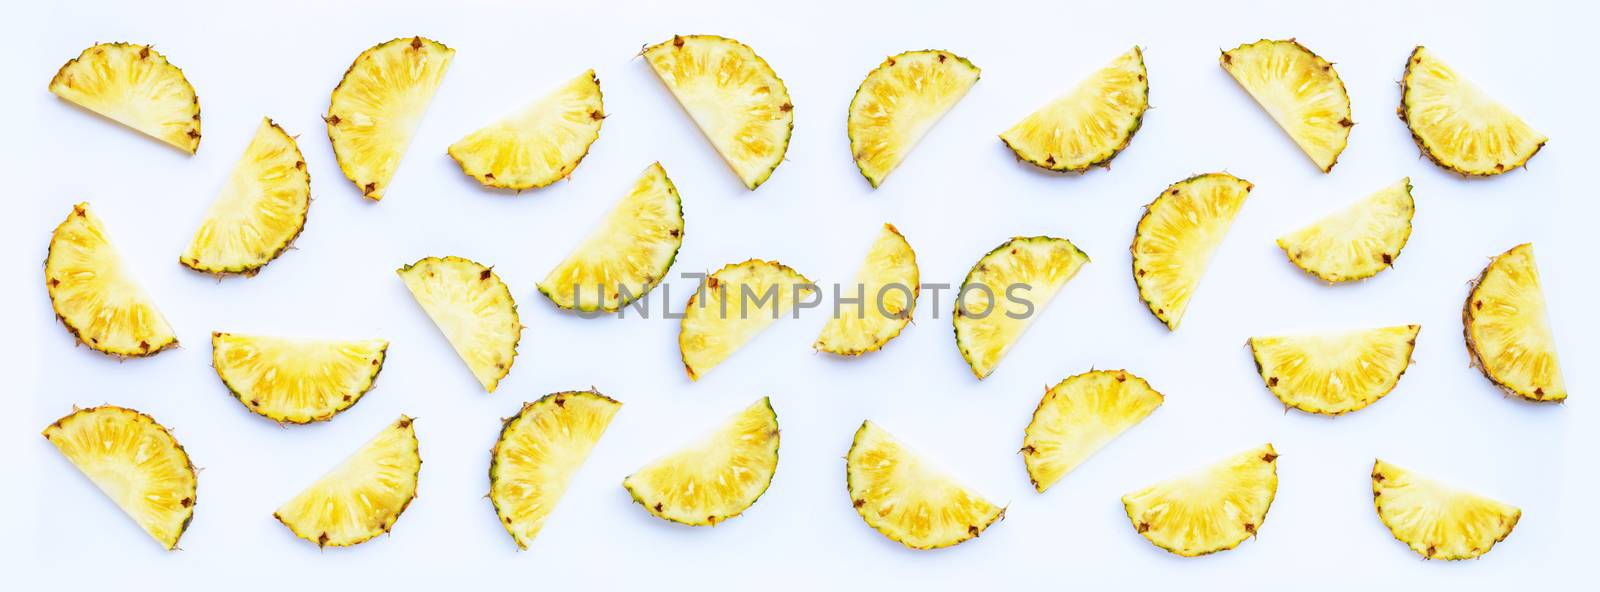 Fresh pineapple on white background.  by Bowonpat